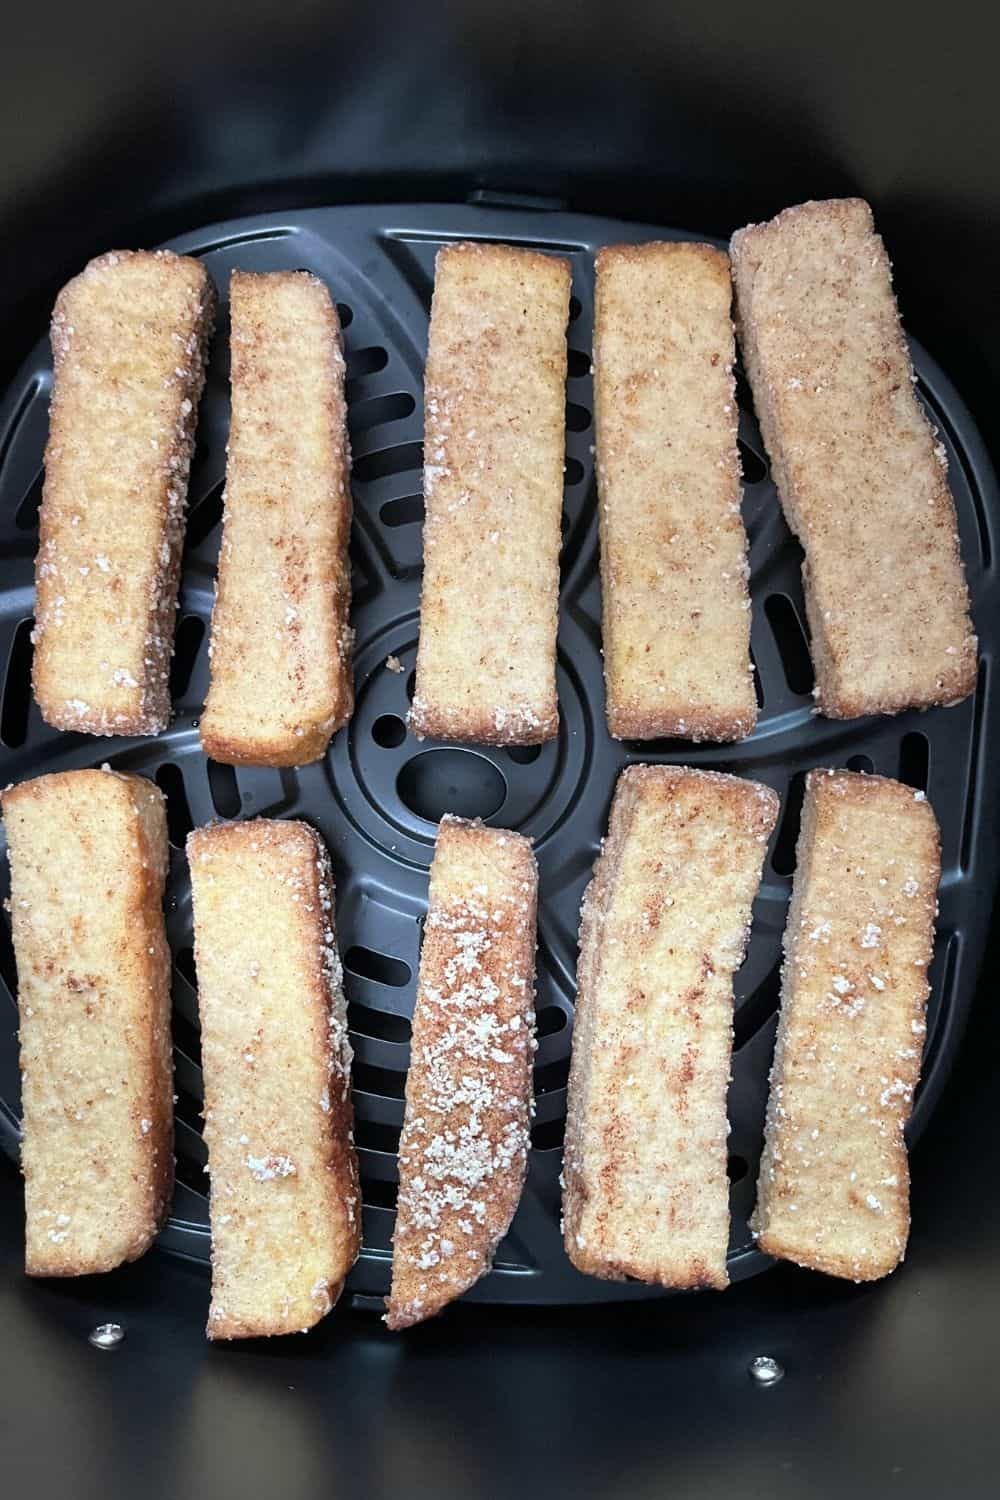 frozen french toast sticks in the air fryer basket